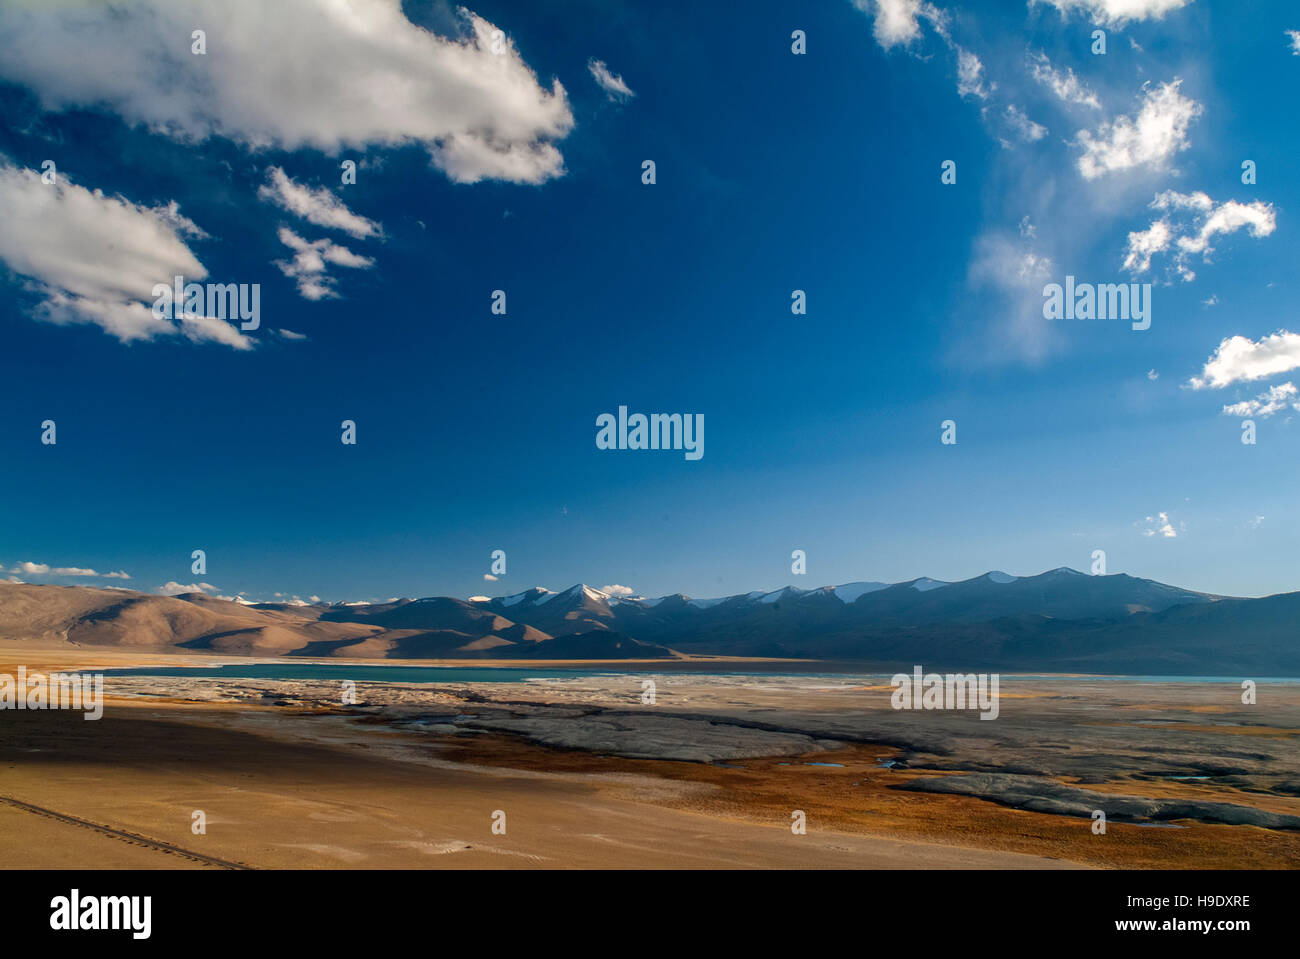 High altitude Tso Kar Lake in Ladakh. Stock Photo